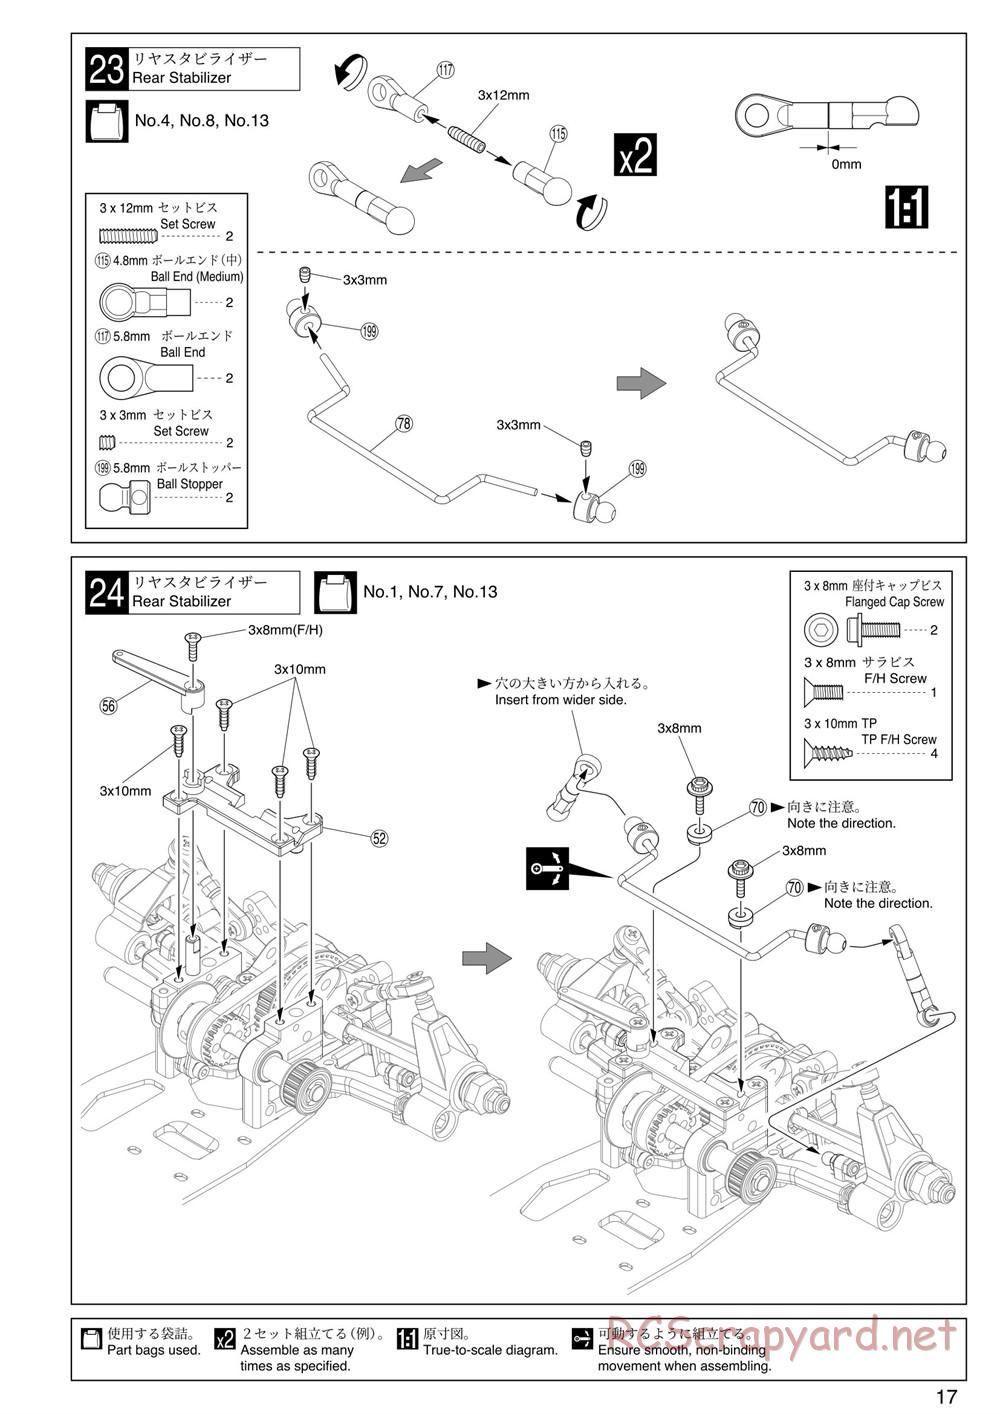 Kyosho - V-One RRR Evo - Manual - Page 17